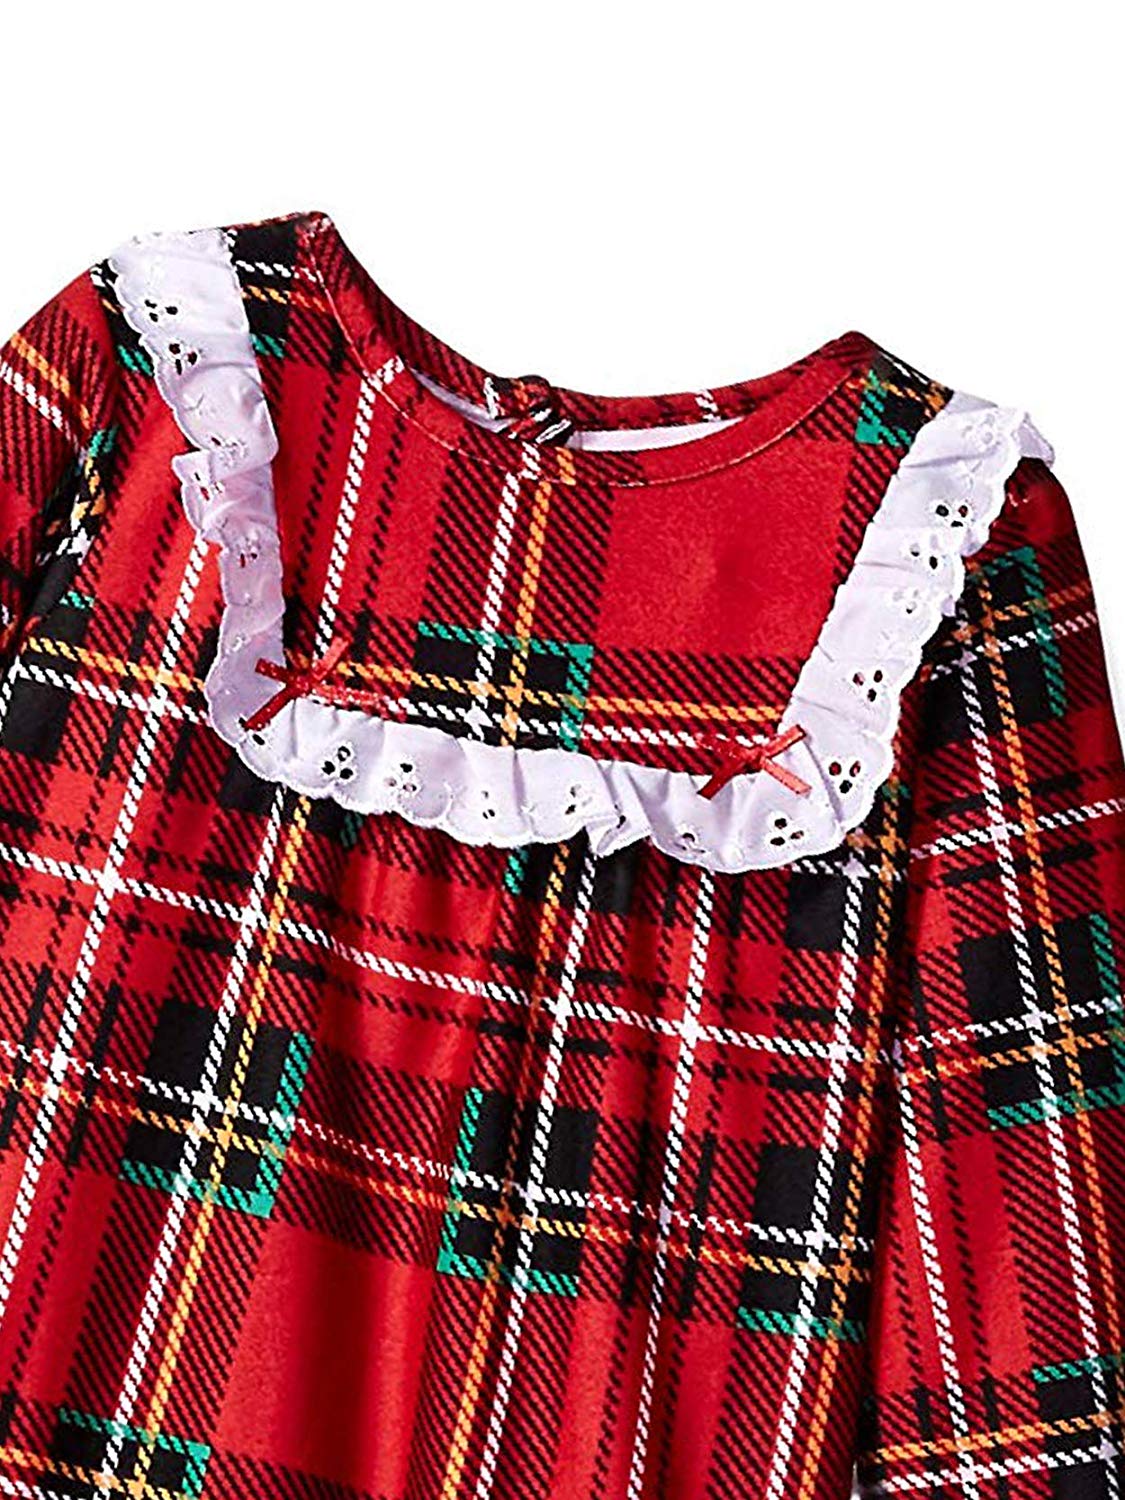 Komar Kids Girls Traditional Holiday Christmas Plaid Nightgown Pajamas K172312 - image 2 of 4